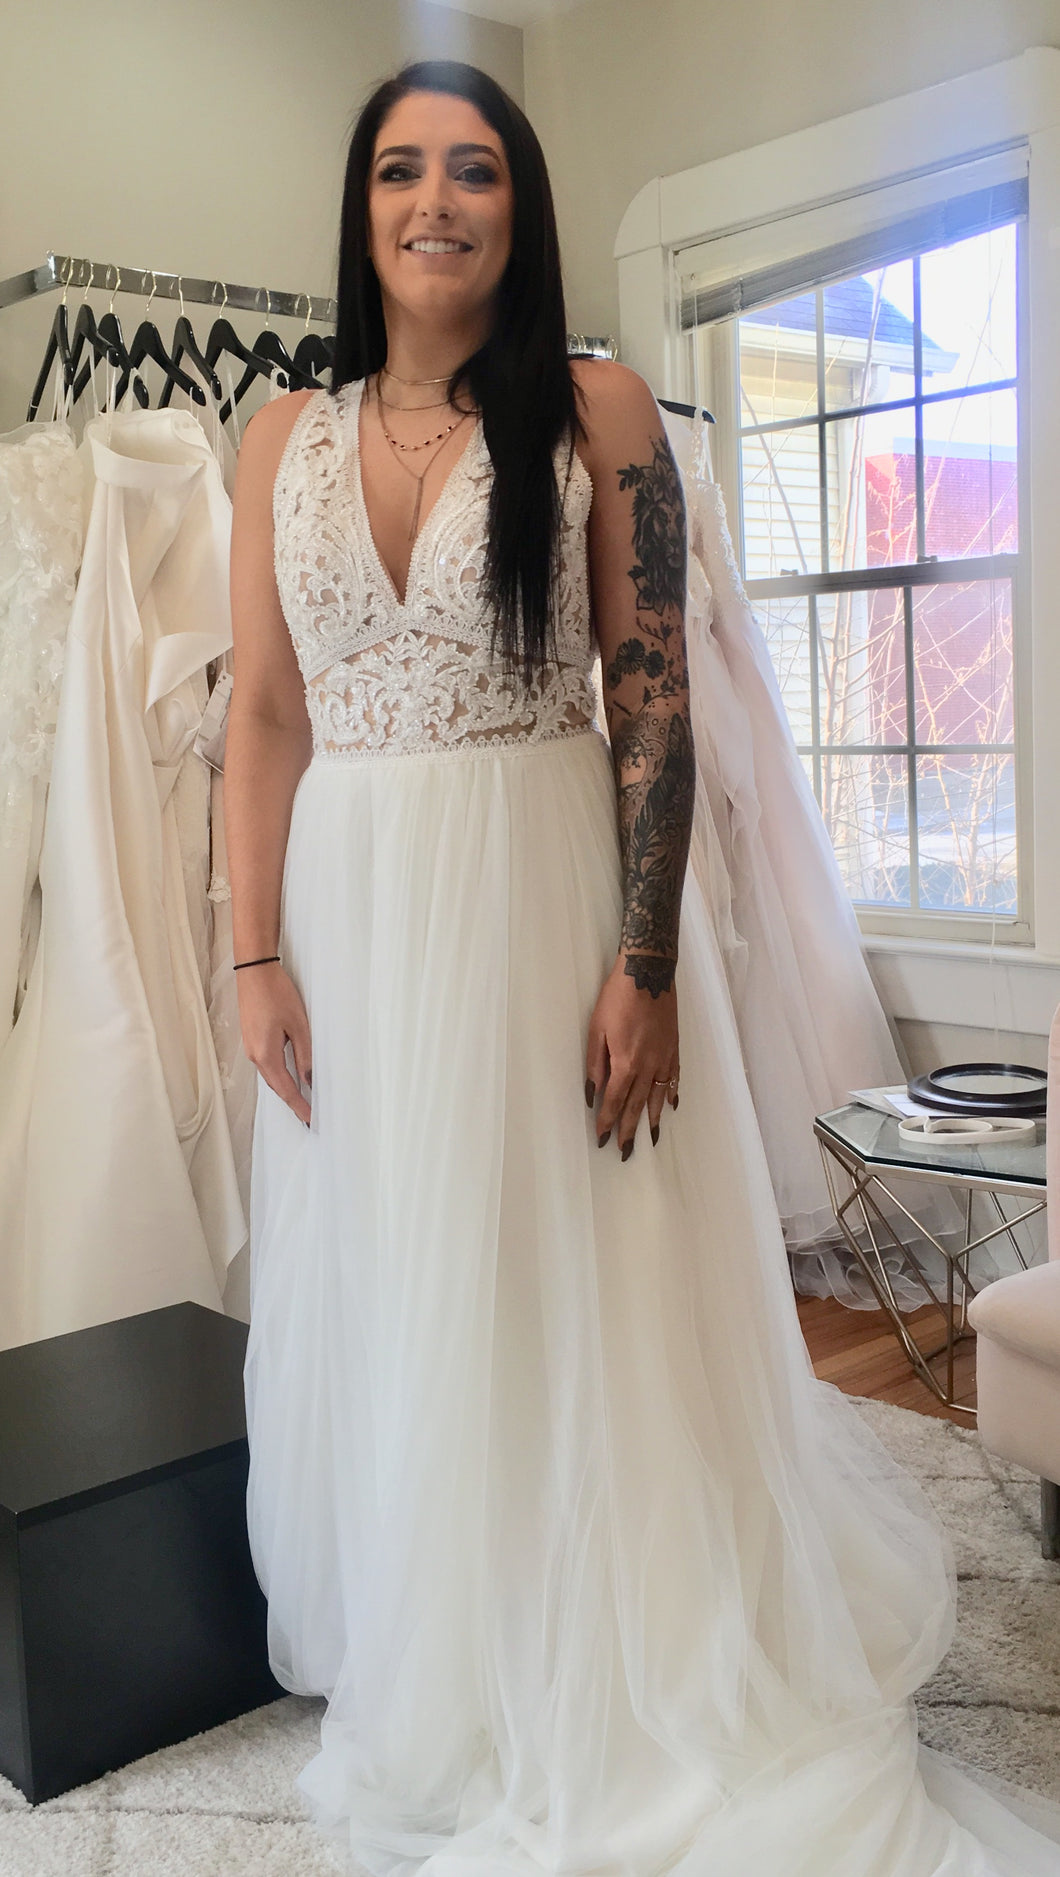 Pronovias 'Espiga' size 8 used wedding dress front view on bride